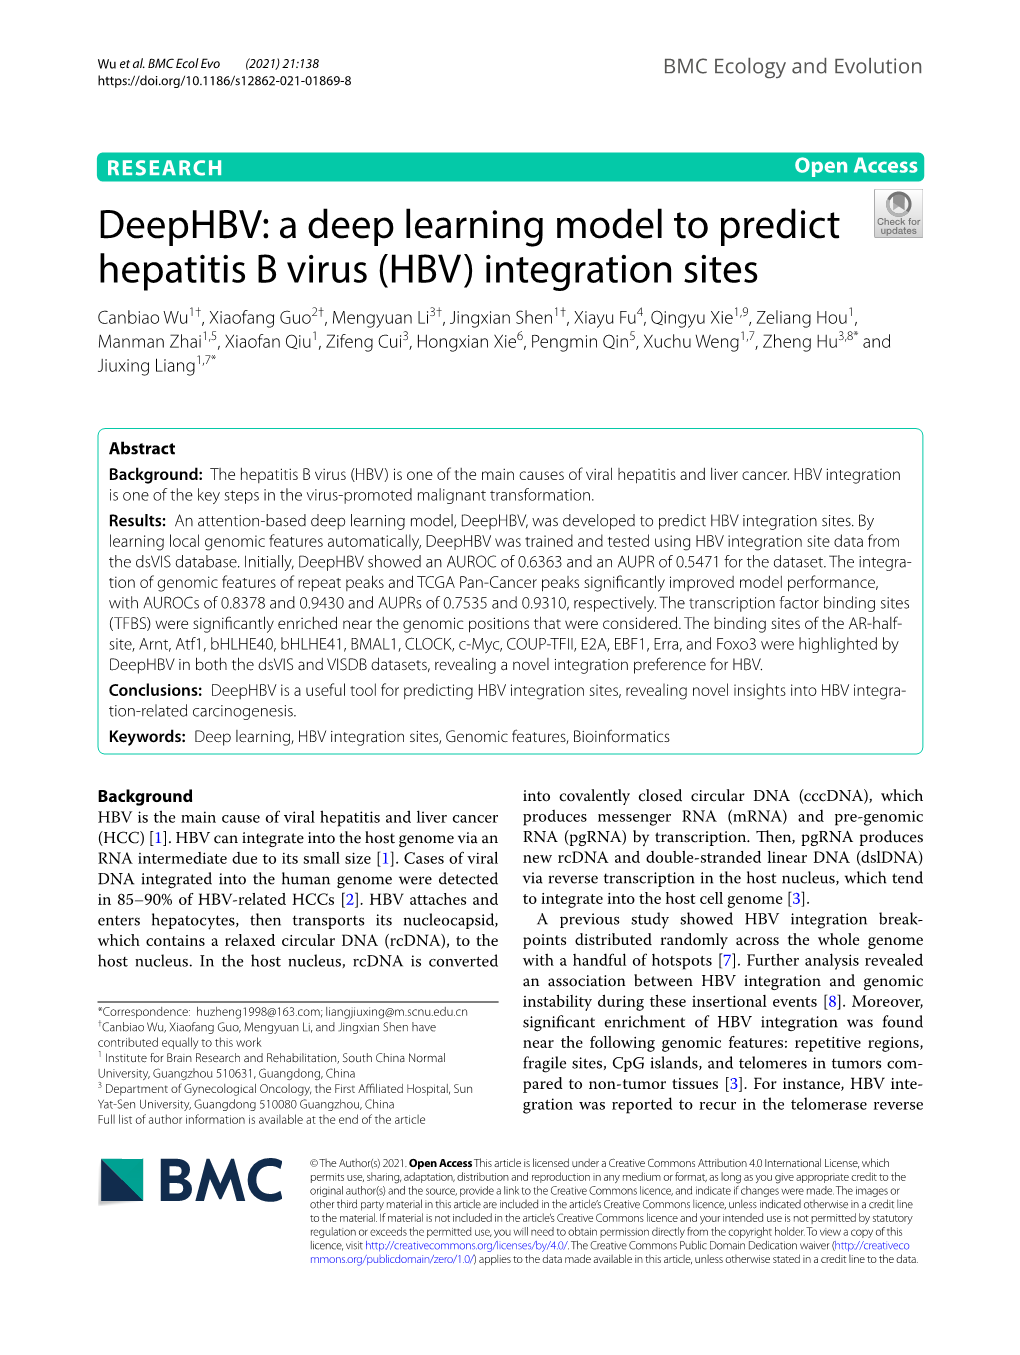 Deephbv: a Deep Learning Model to Predict Hepatitis B Virus (HBV)